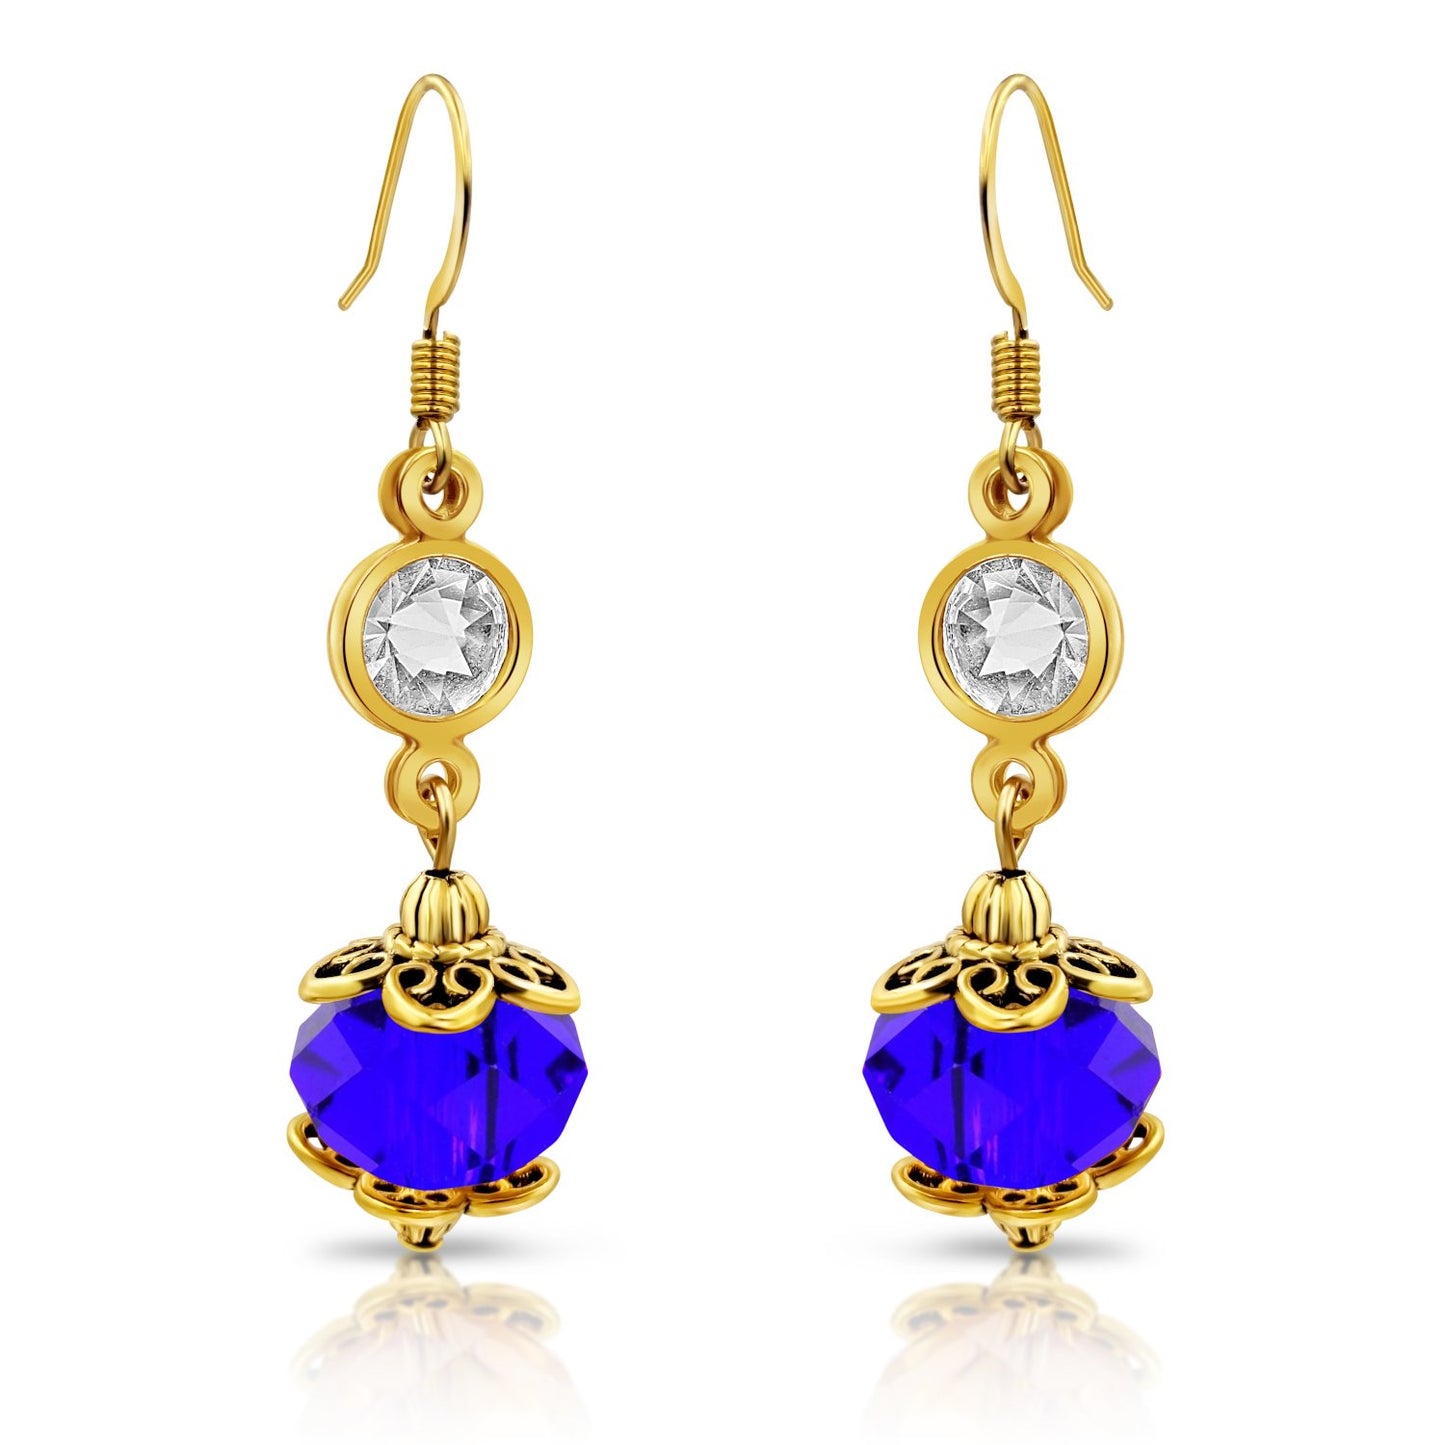 BESHEEK Goldtone and Cobalt Blue Crystal Dangle Earrings | Handmade Hypoallergenic Boho Beach Gala Wedding Style Fashion Earrings